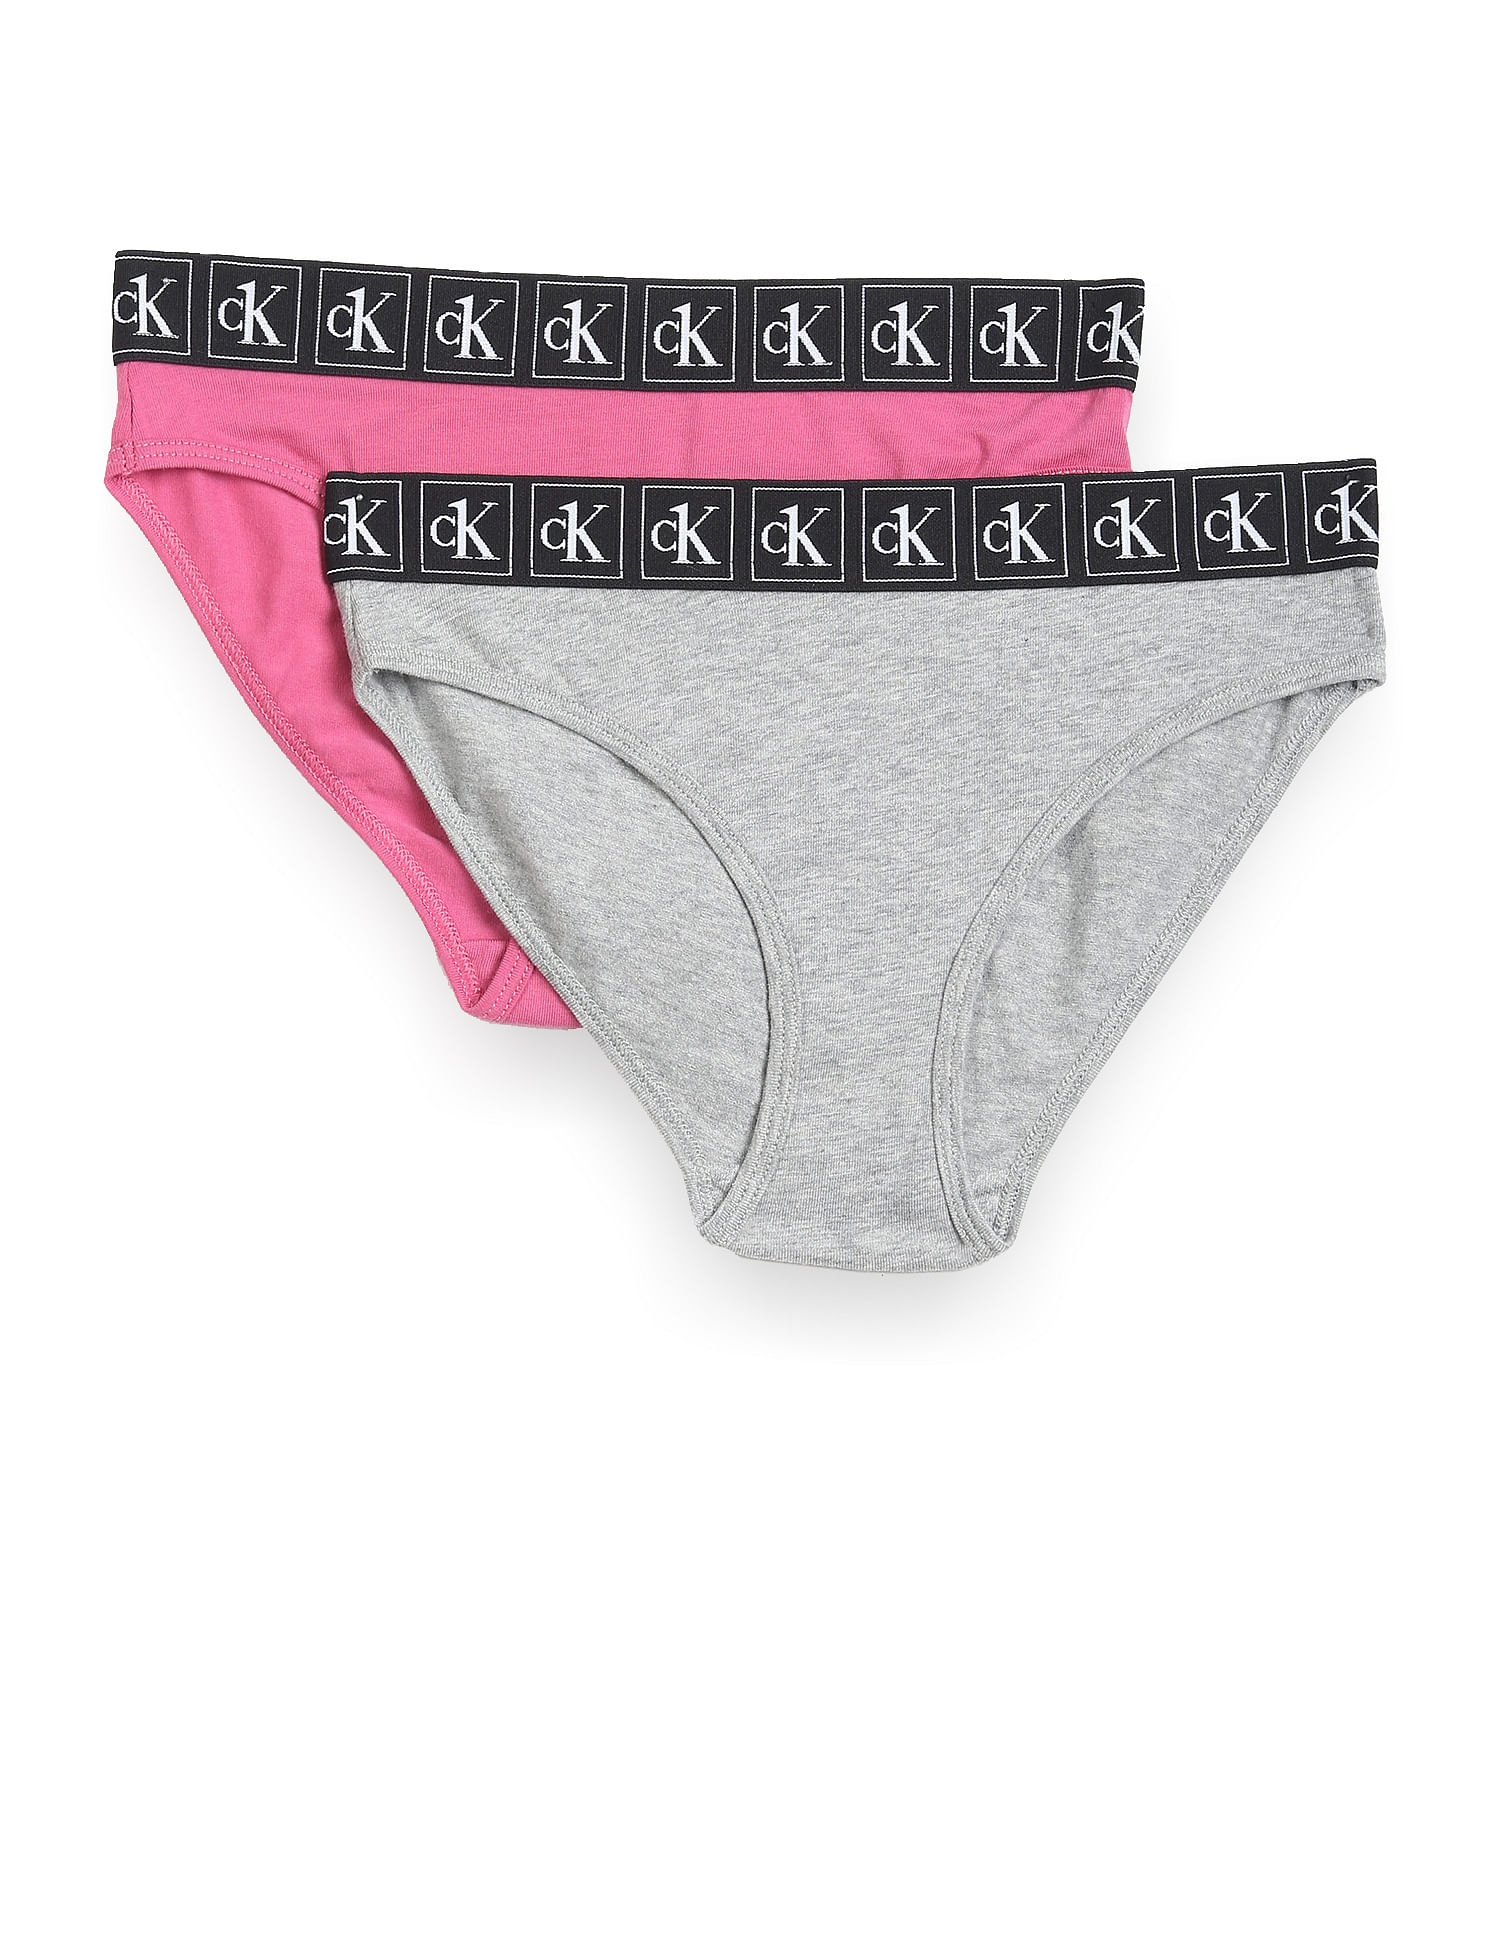 CK logo bikini panty, Calvin Klein, Shop Bikini Panties Online